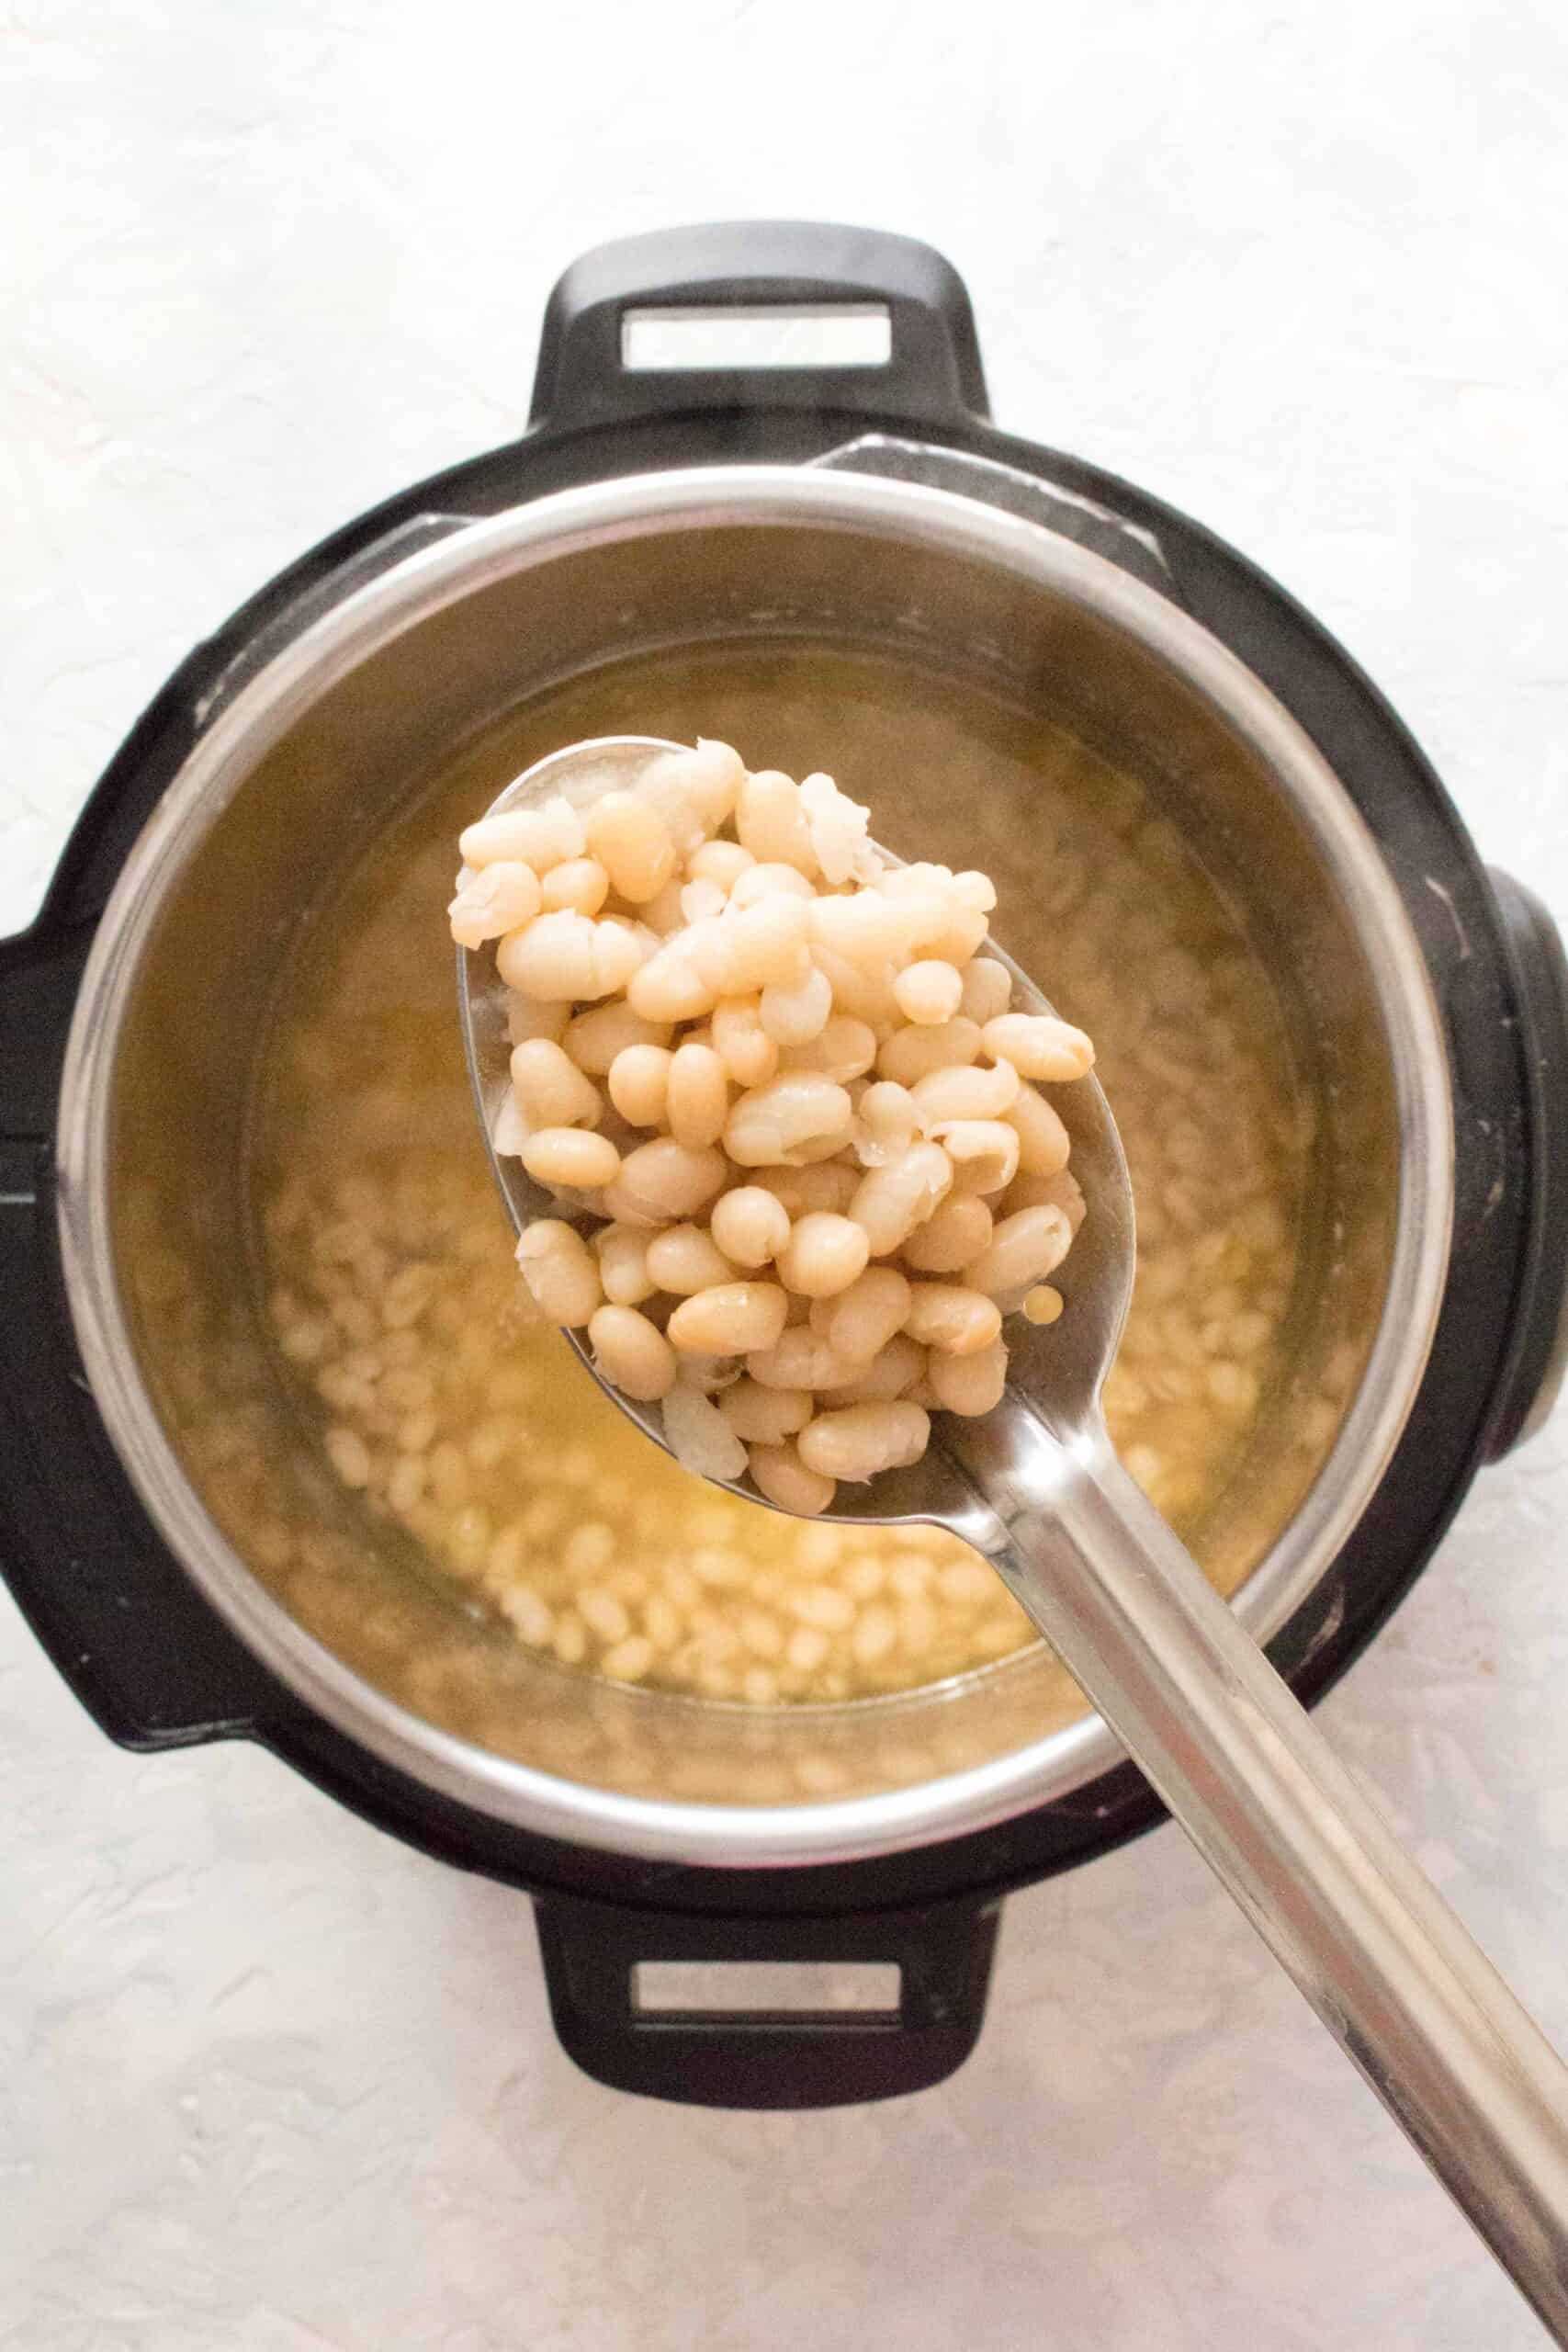 https://carmyy.com/wp-content/uploads/2020/02/instant-pot-white-beans-2-scaled.jpg